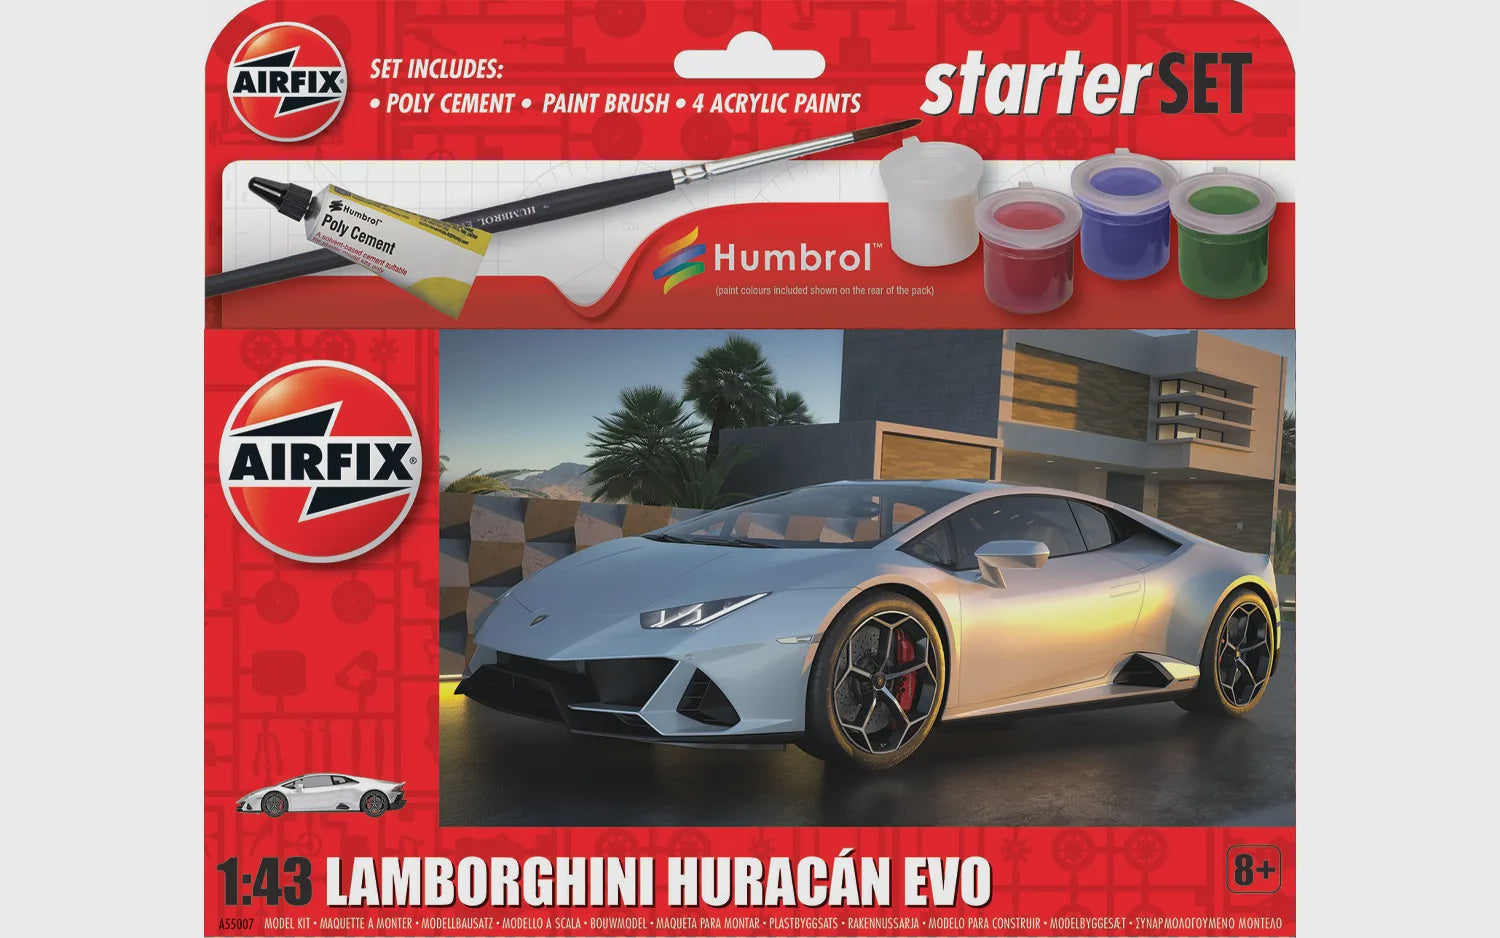 Lamborghini Huracan Evo - Starter Set (1/43) #55007 by Airfix